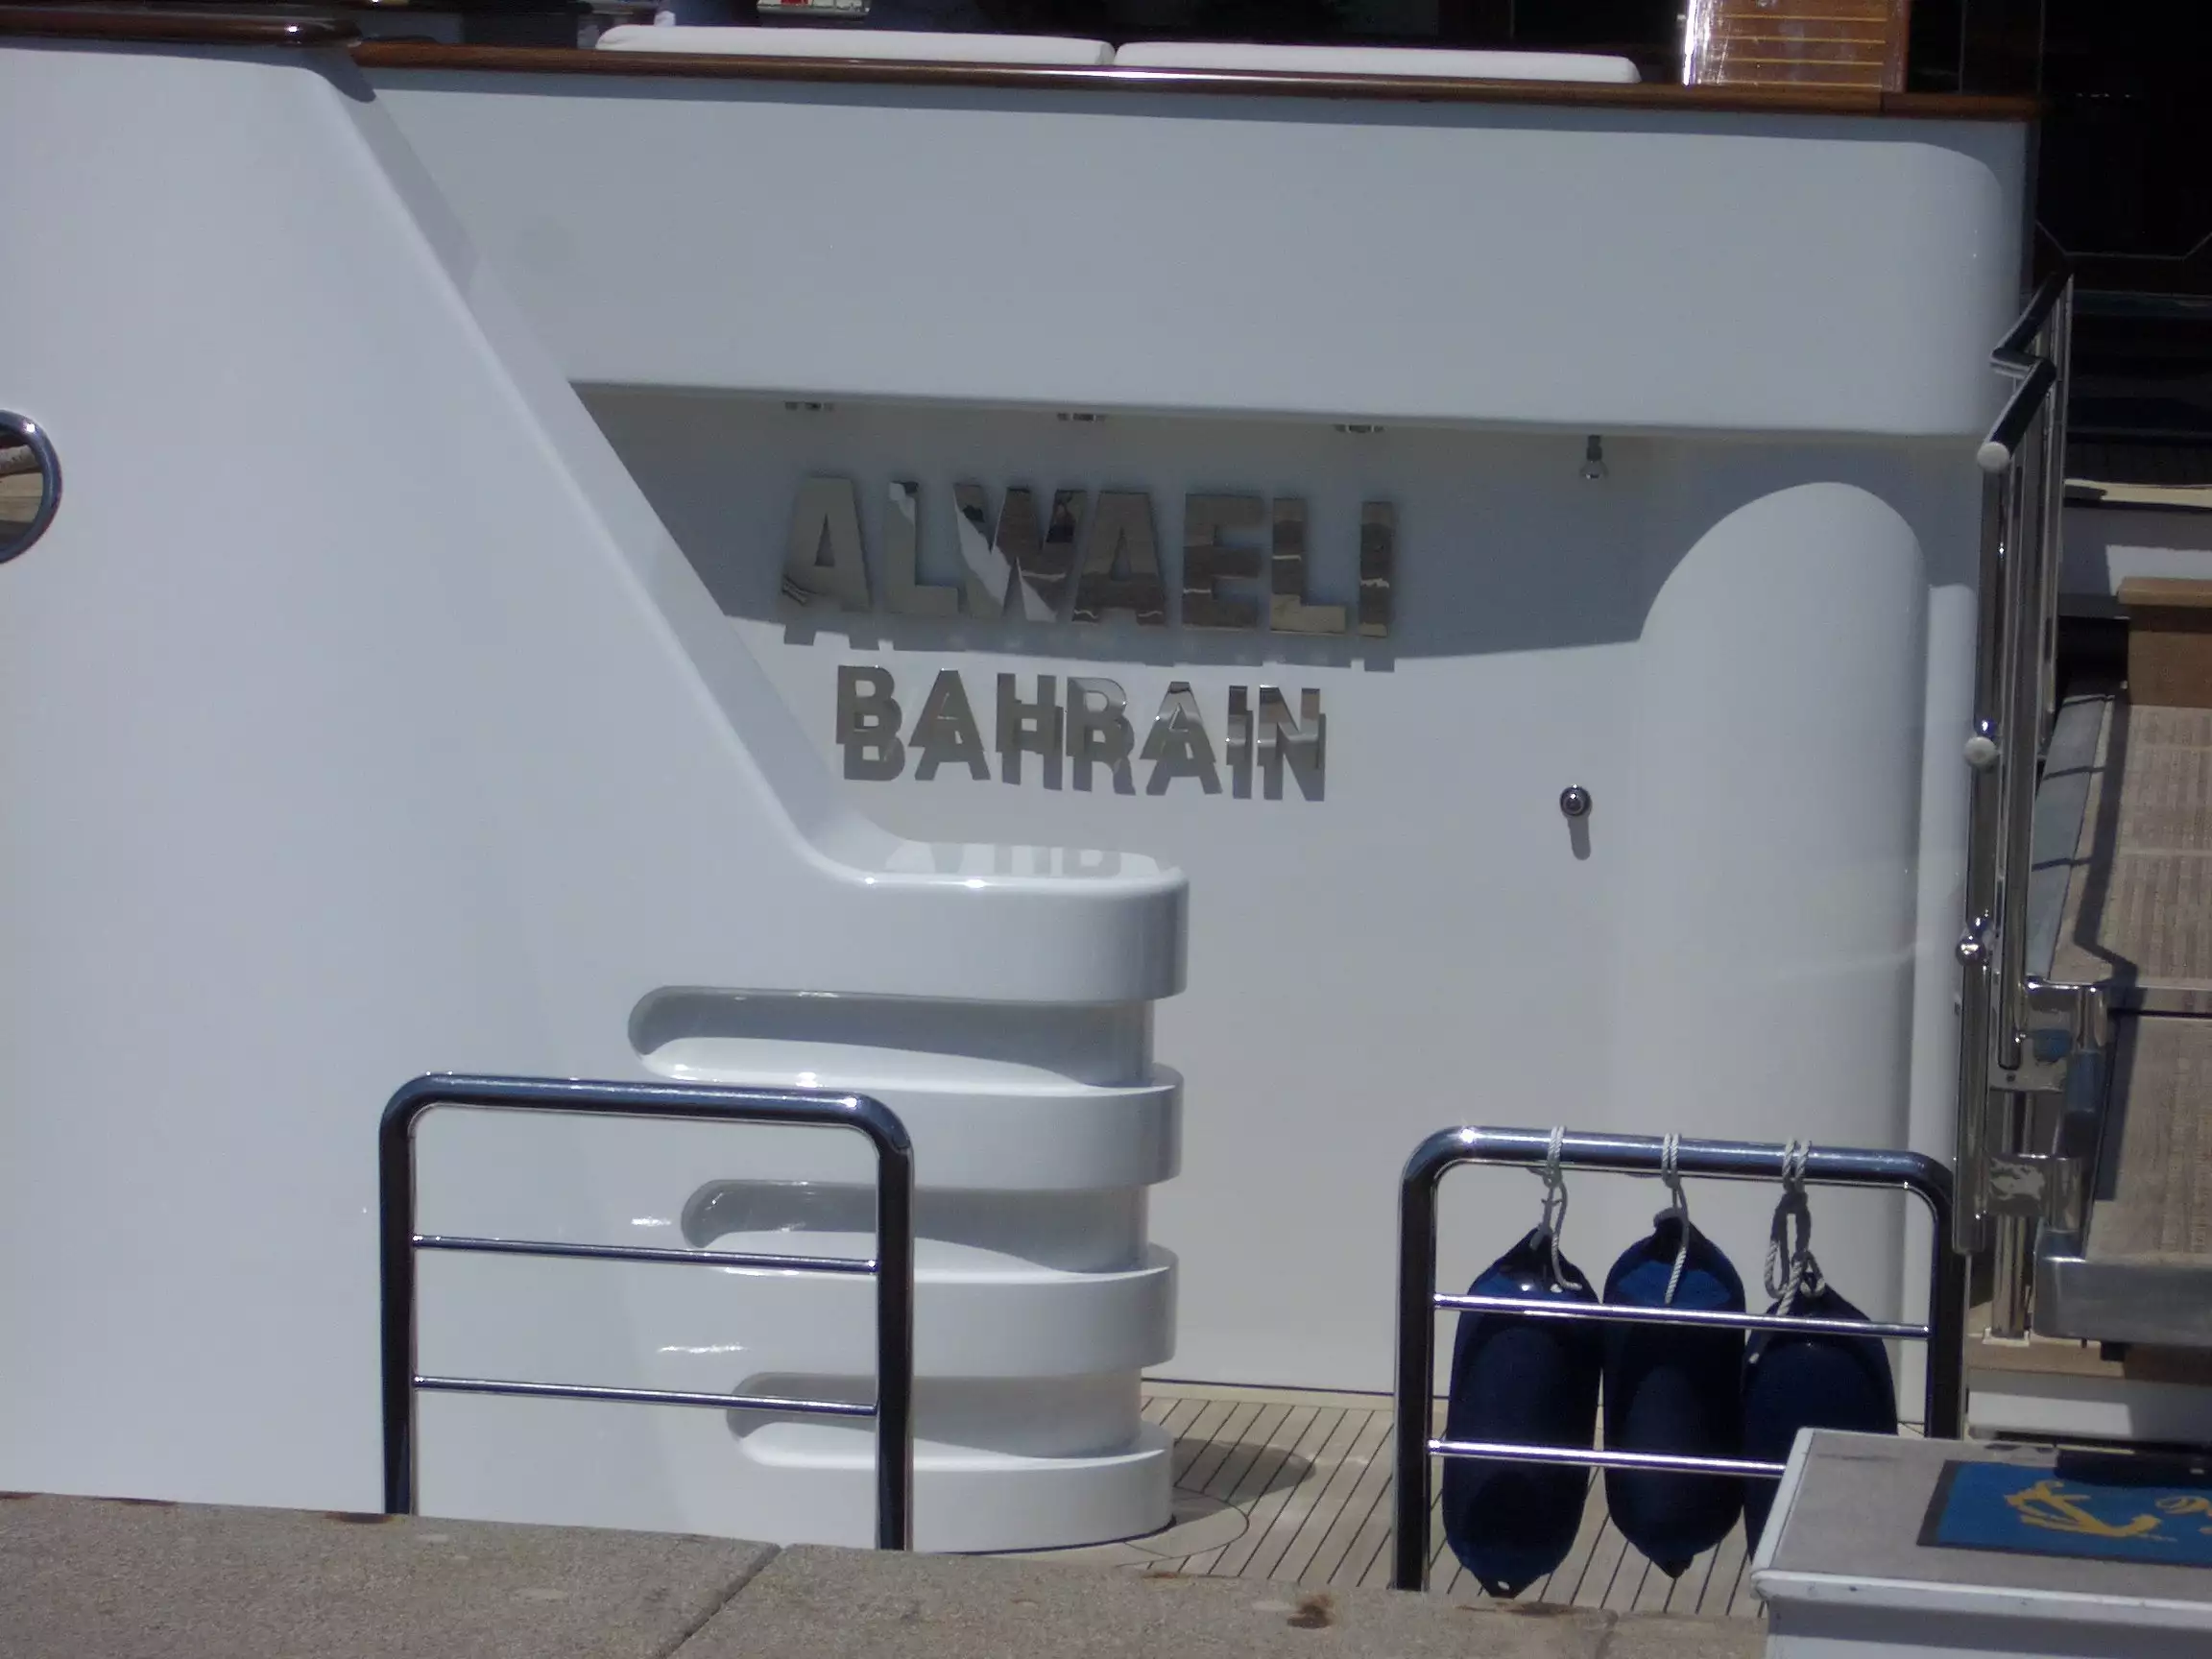 ALWAELI Yacht • CRN • 1991 • Owner King of Bahrain